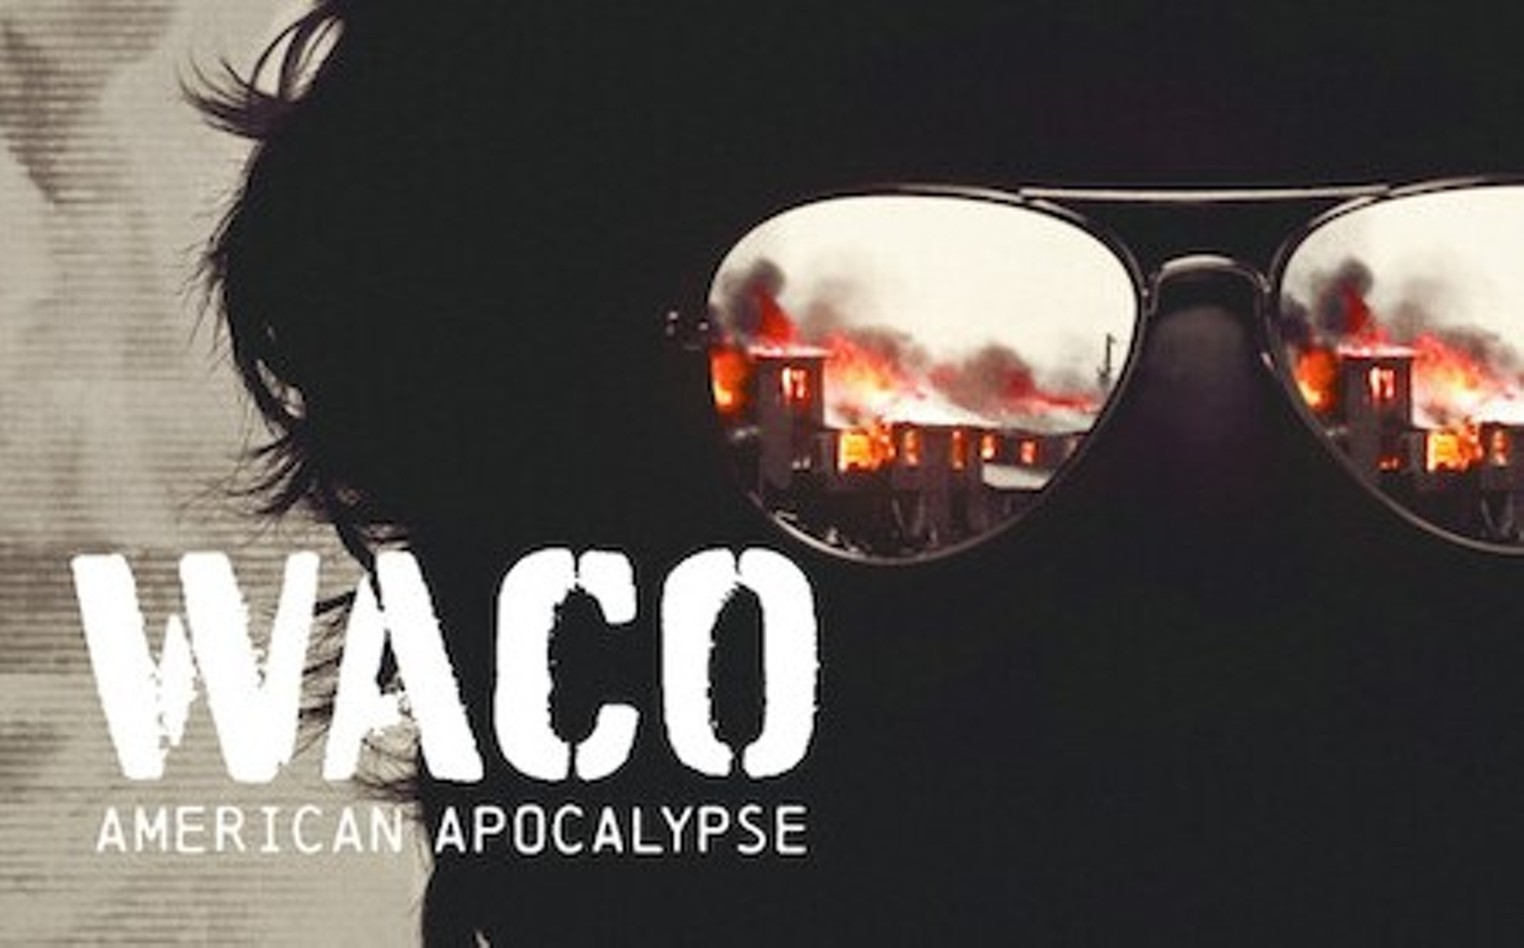 Two New Movies Examine the Tragic Waco Siege on Its 30th Anniversary